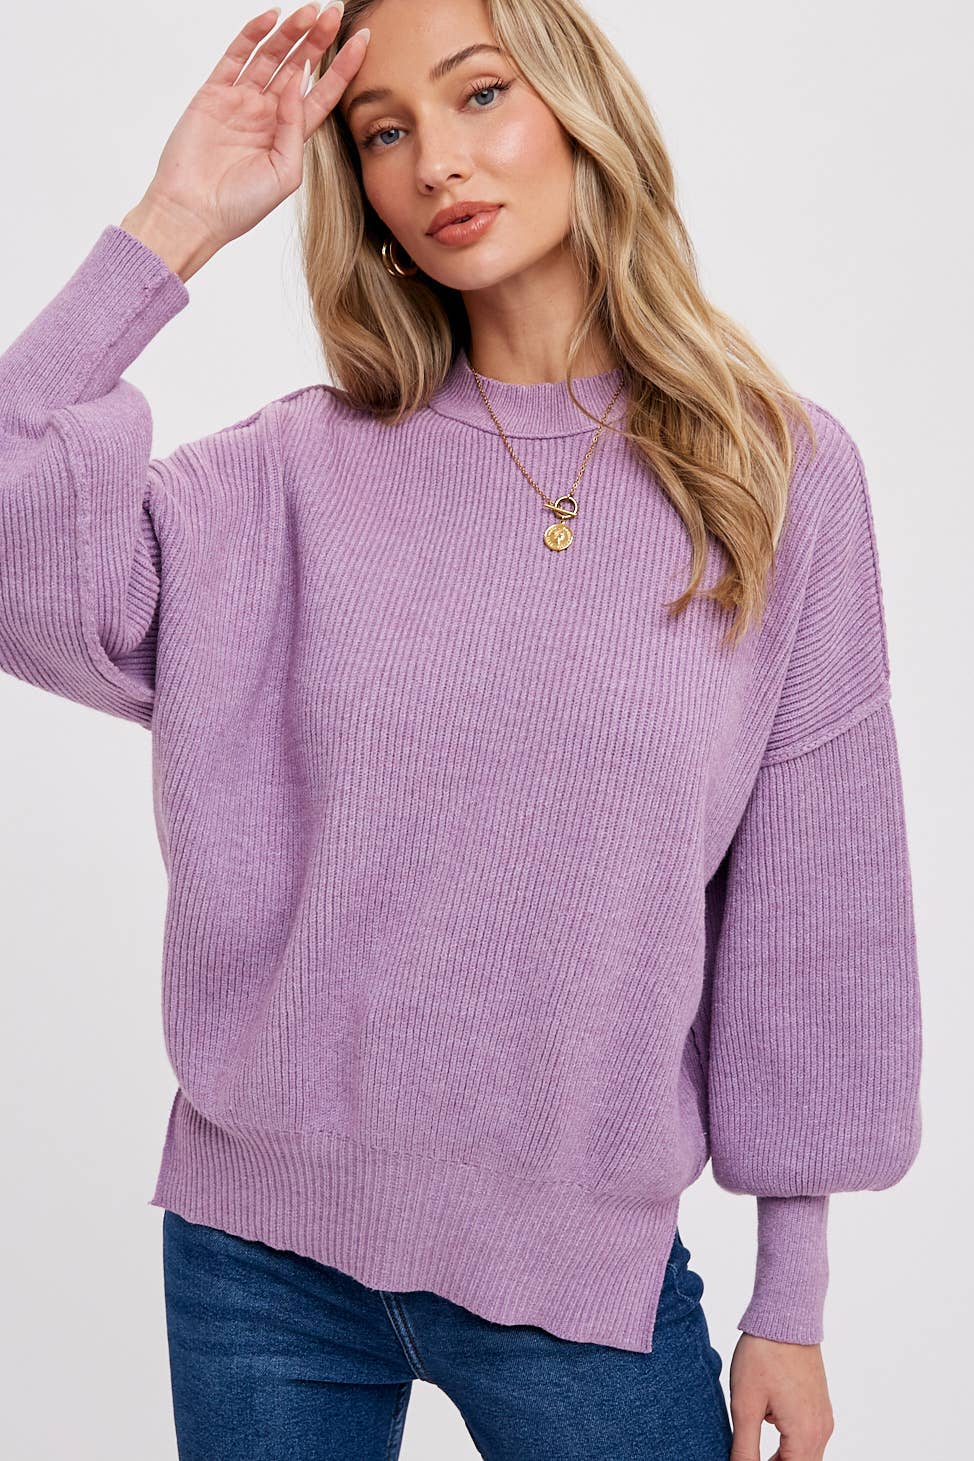 Lavender Haze sweater